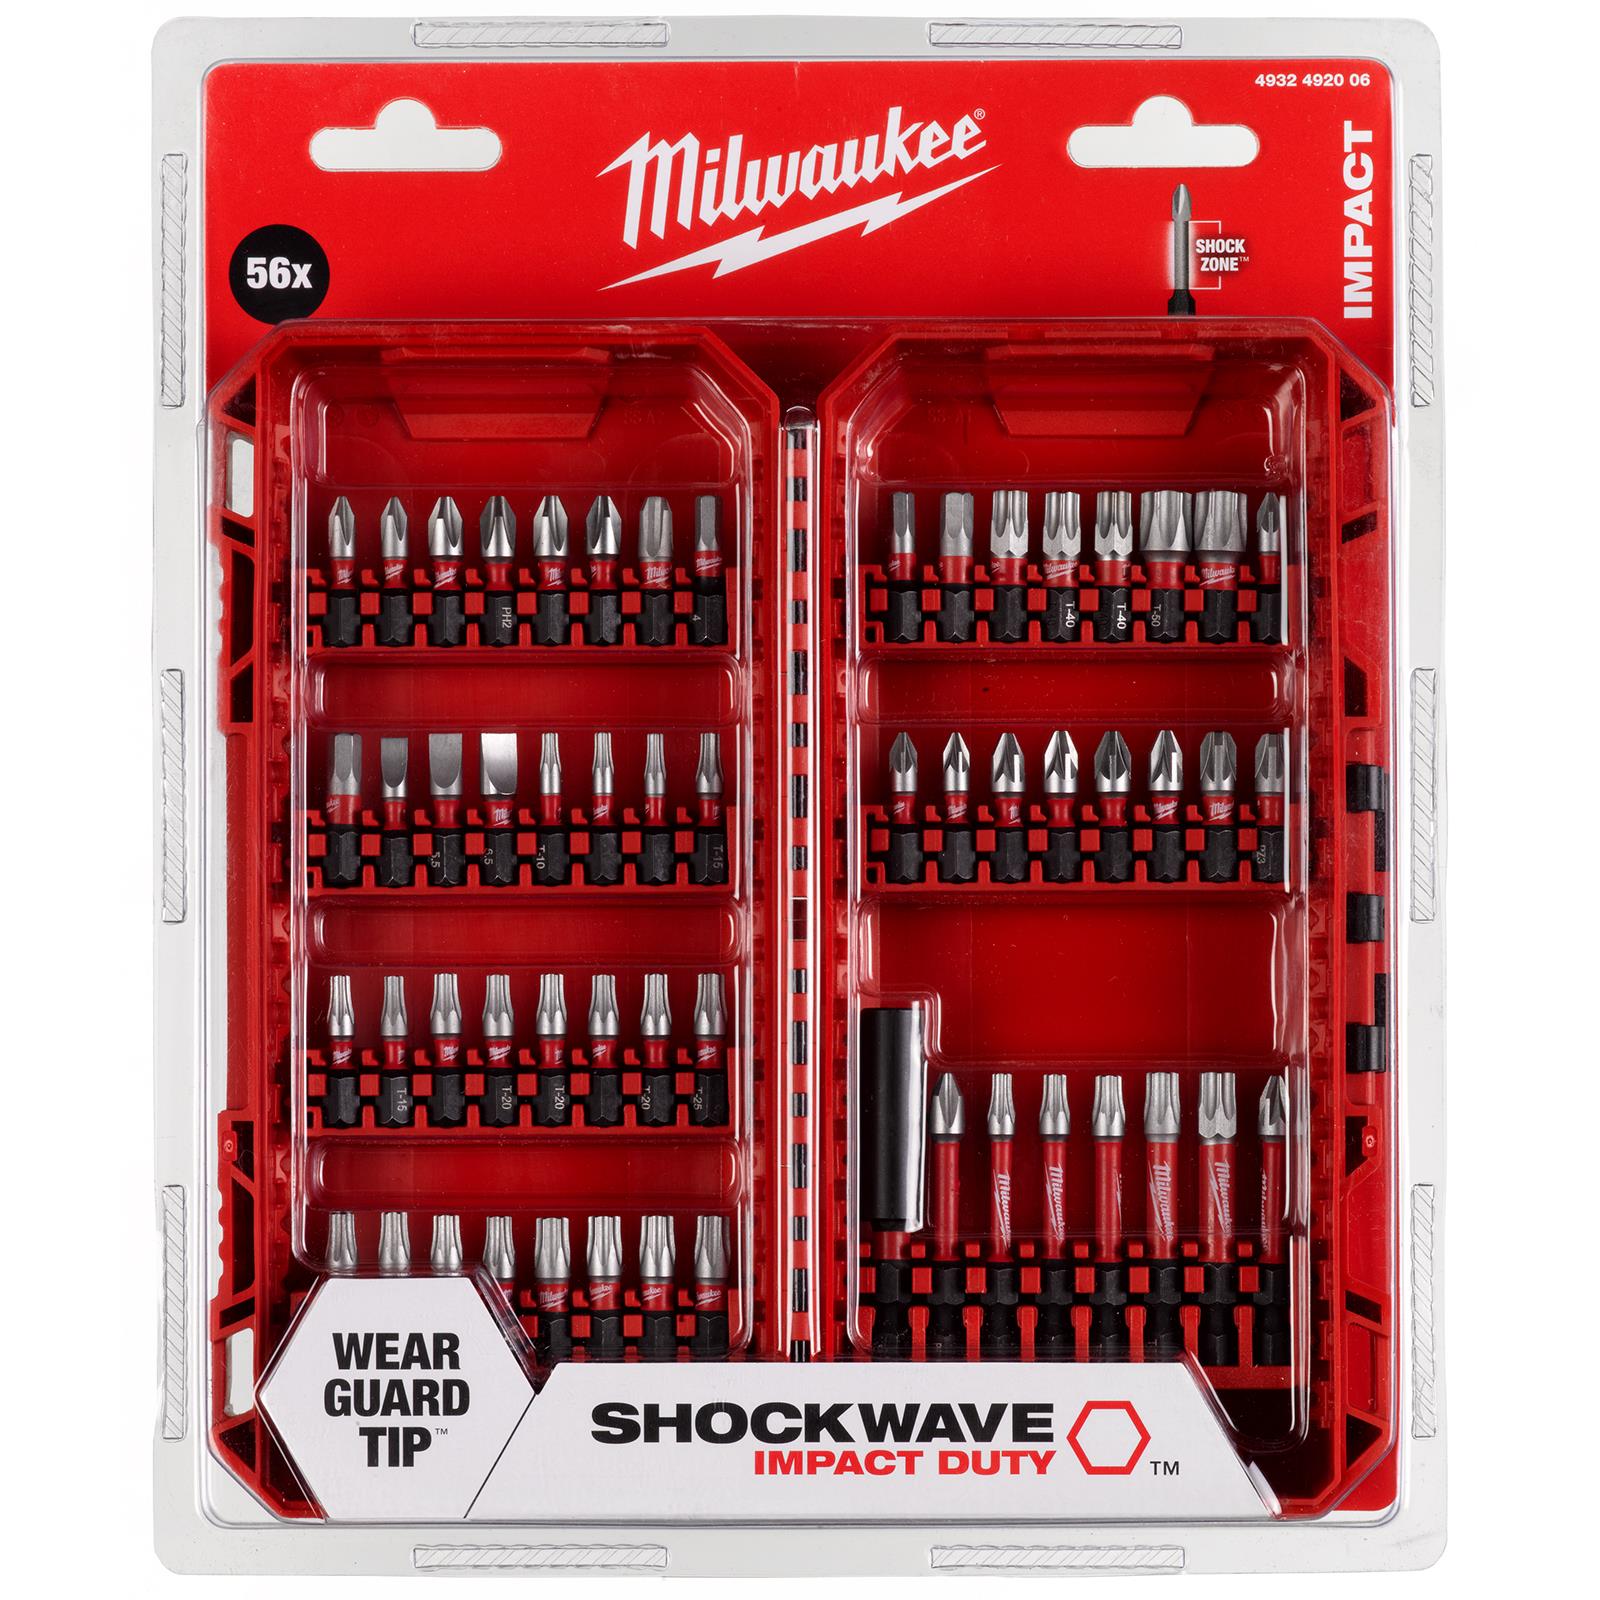 Milwaukee Screwdriver Bit Set Shockwave Impact Duty Drill Power Tool 56pc